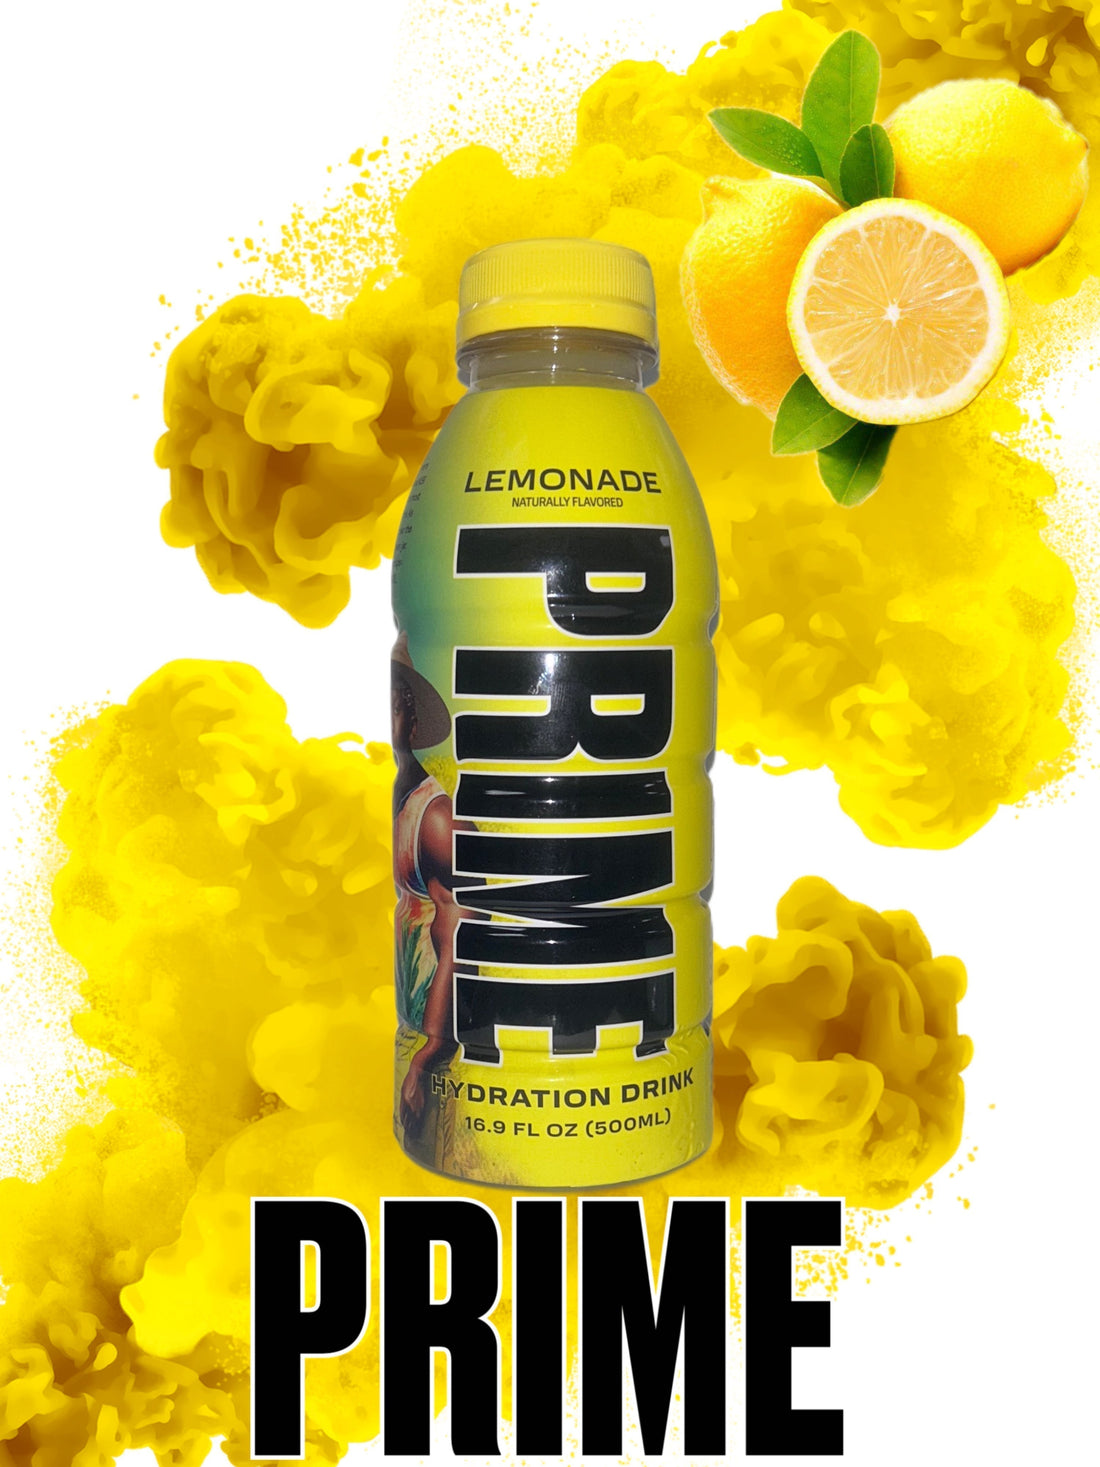 Limited Edition Prime Lemonade Takes Venice Beach by Storm - Extreme Snacks